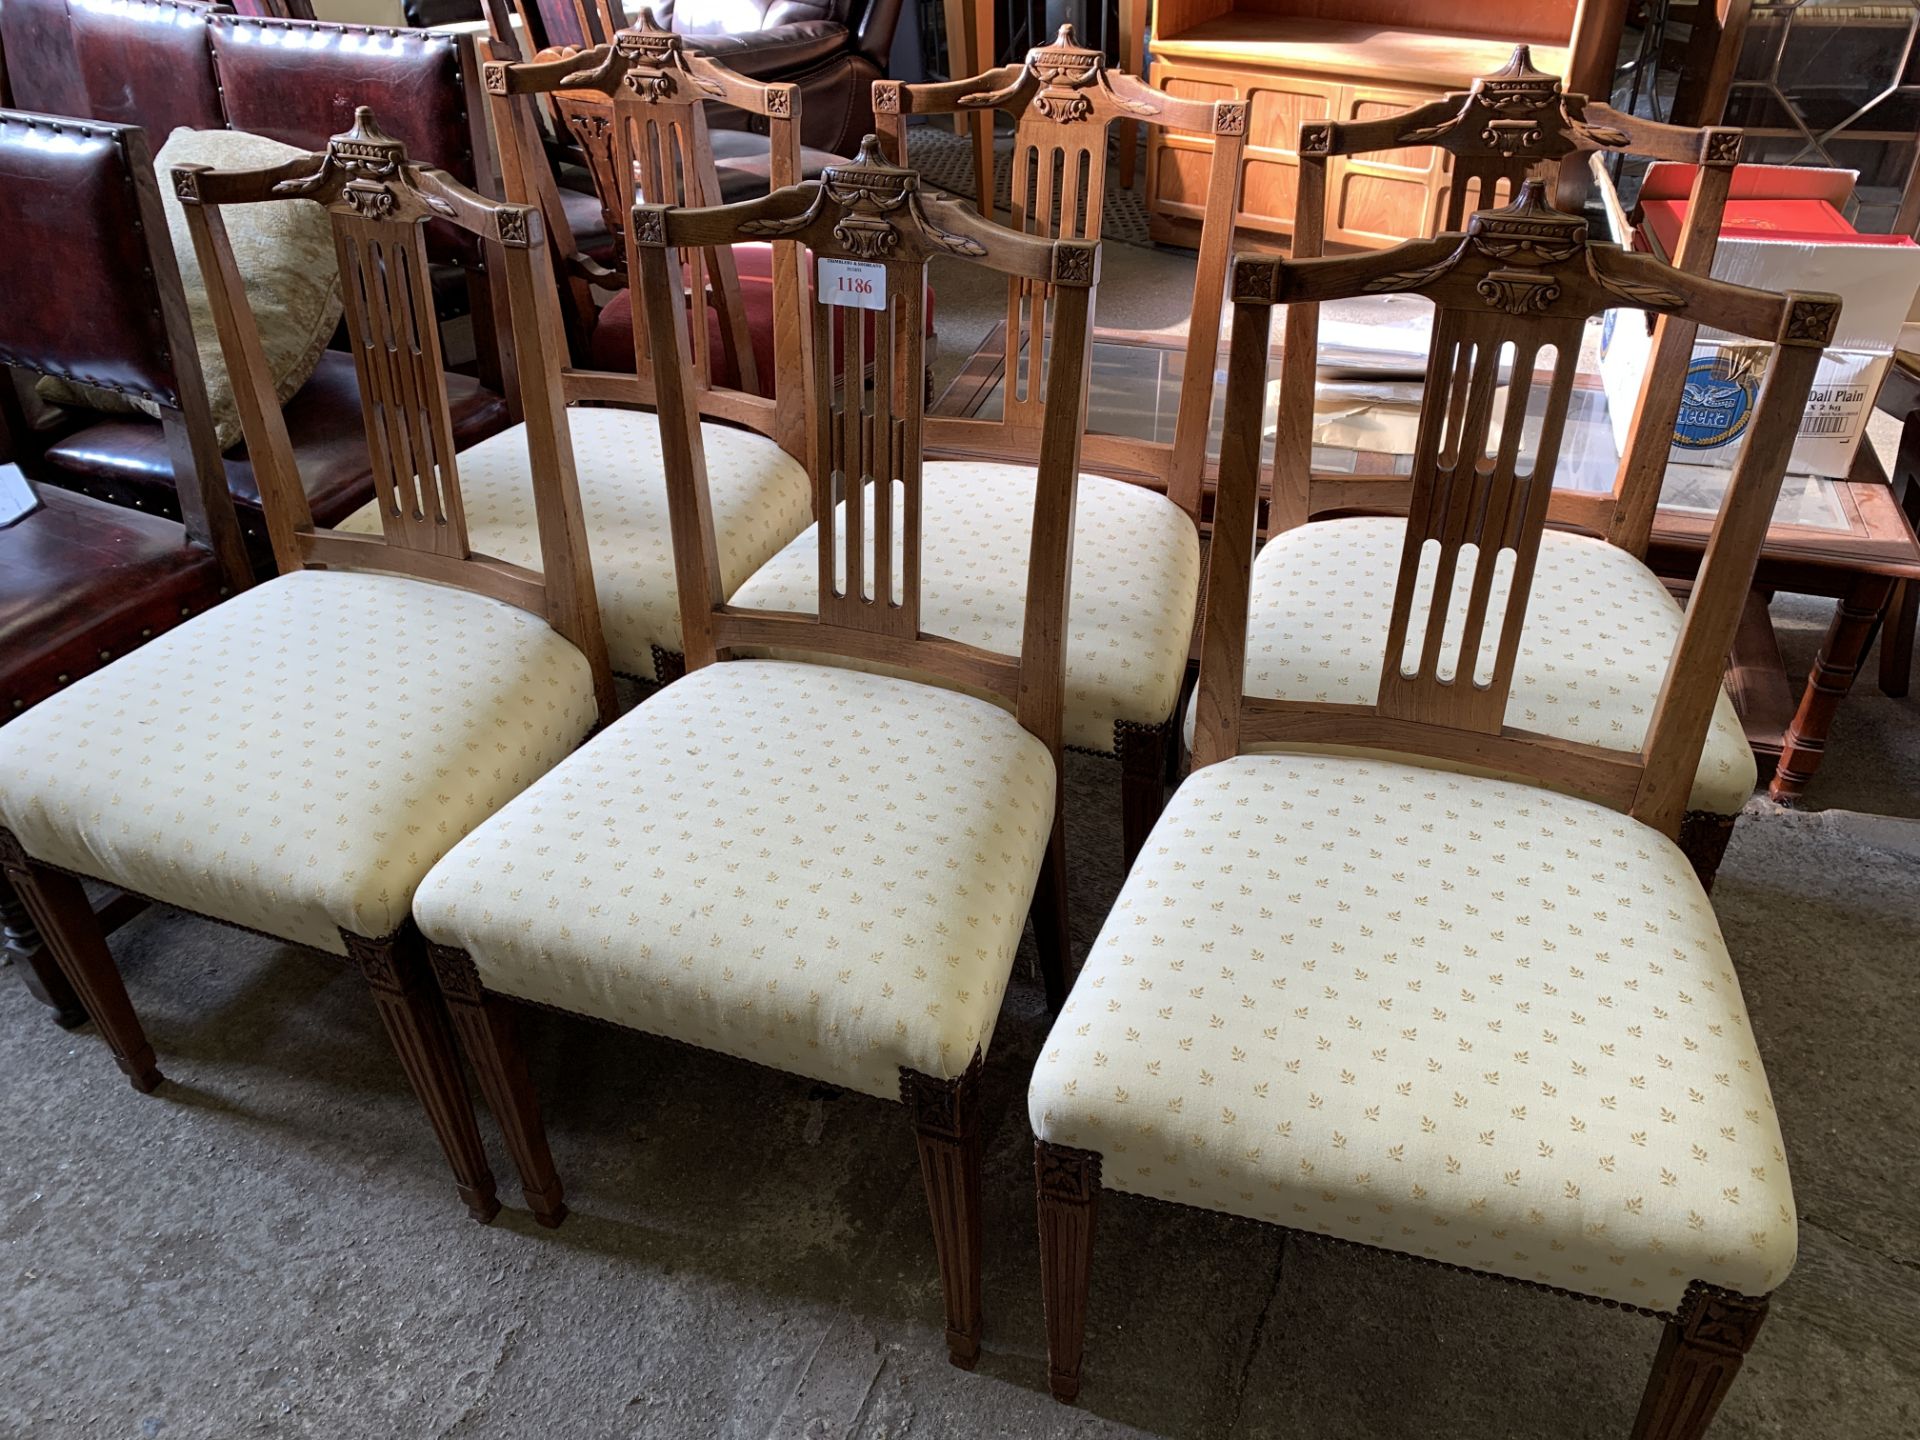 Six oak dining chairs